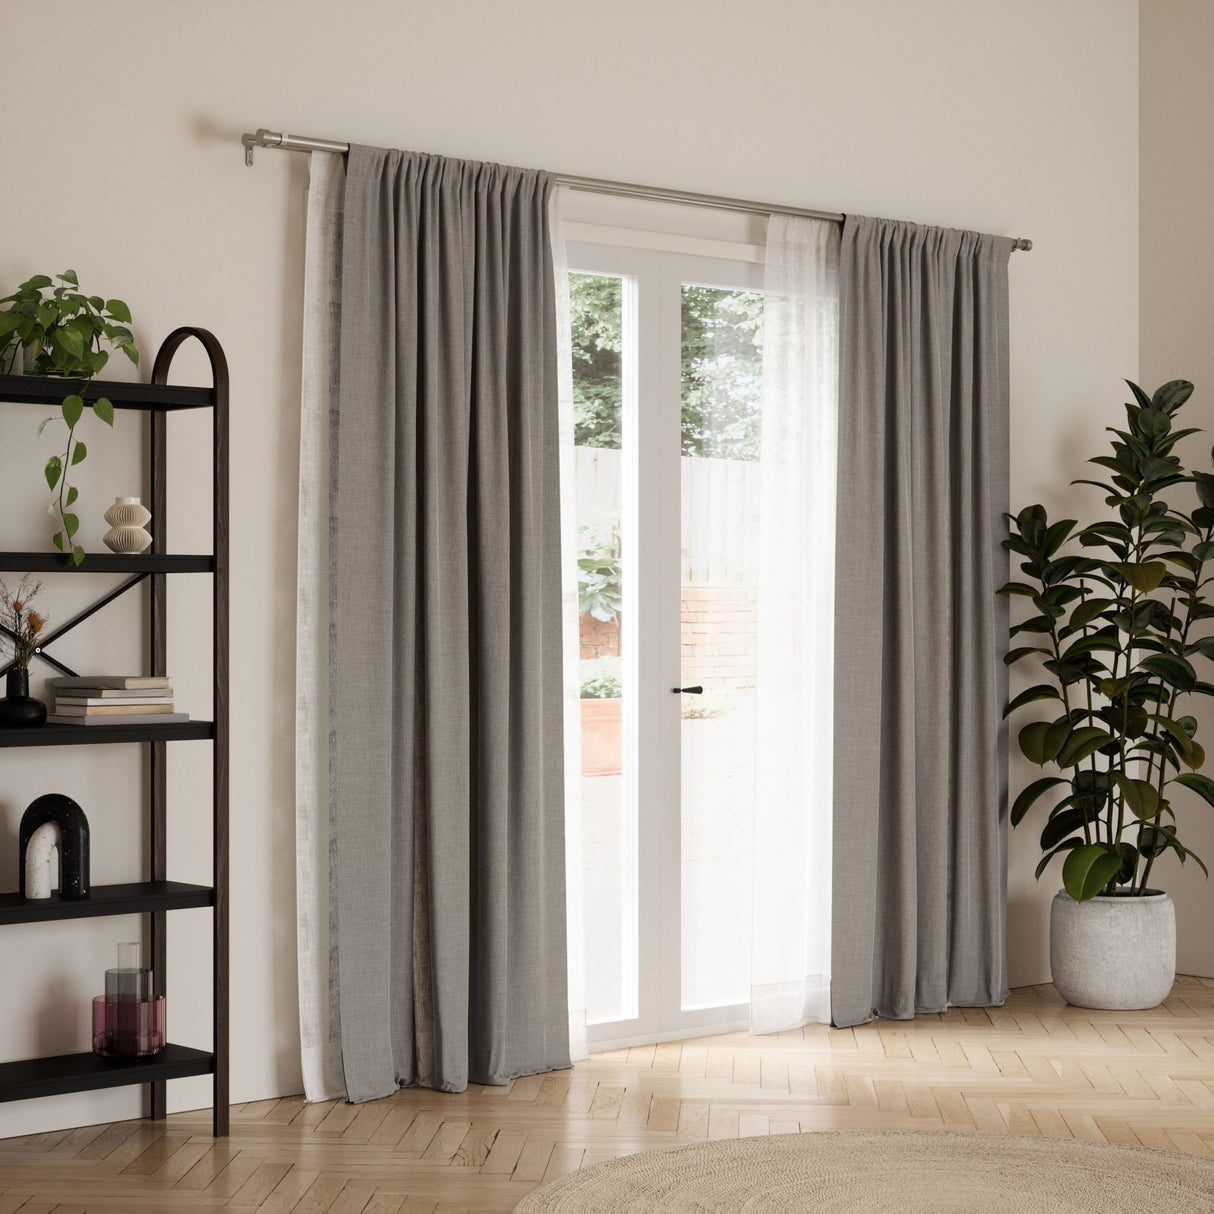 Double Curtain Rods | color: Nickel | size: 36-66" (91-168 cm) | diameter: 1" (2.5 cm)